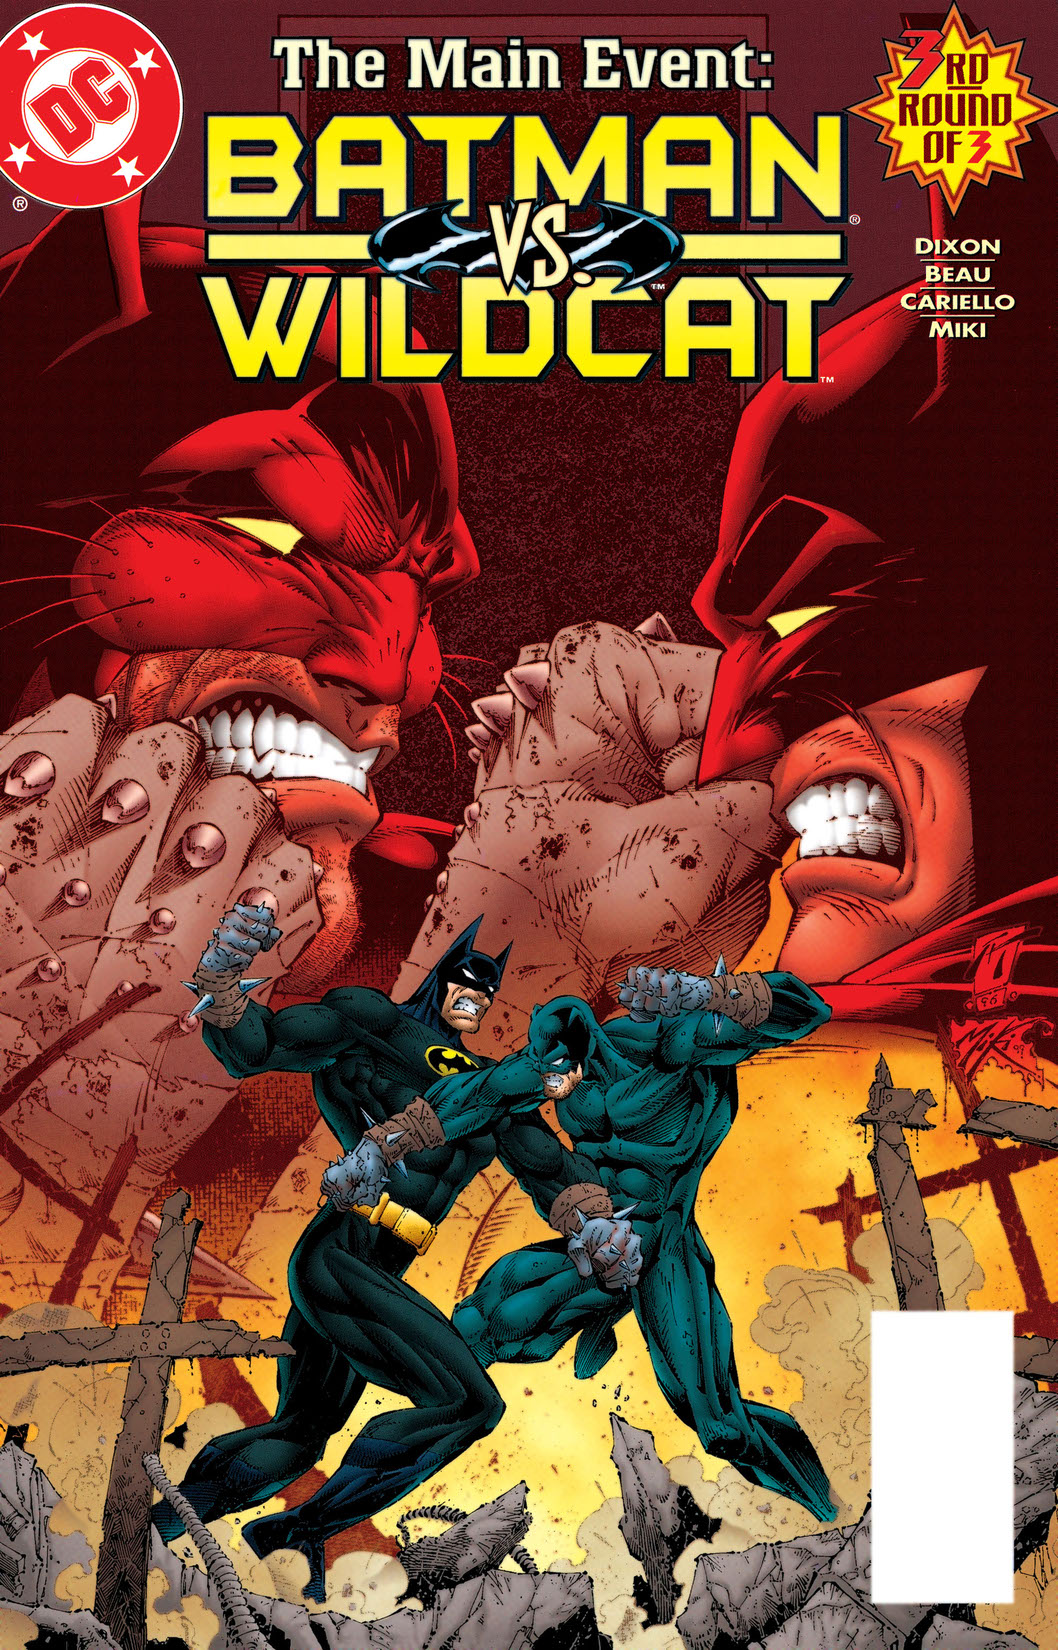 Batman/Wildcat #3 preview images